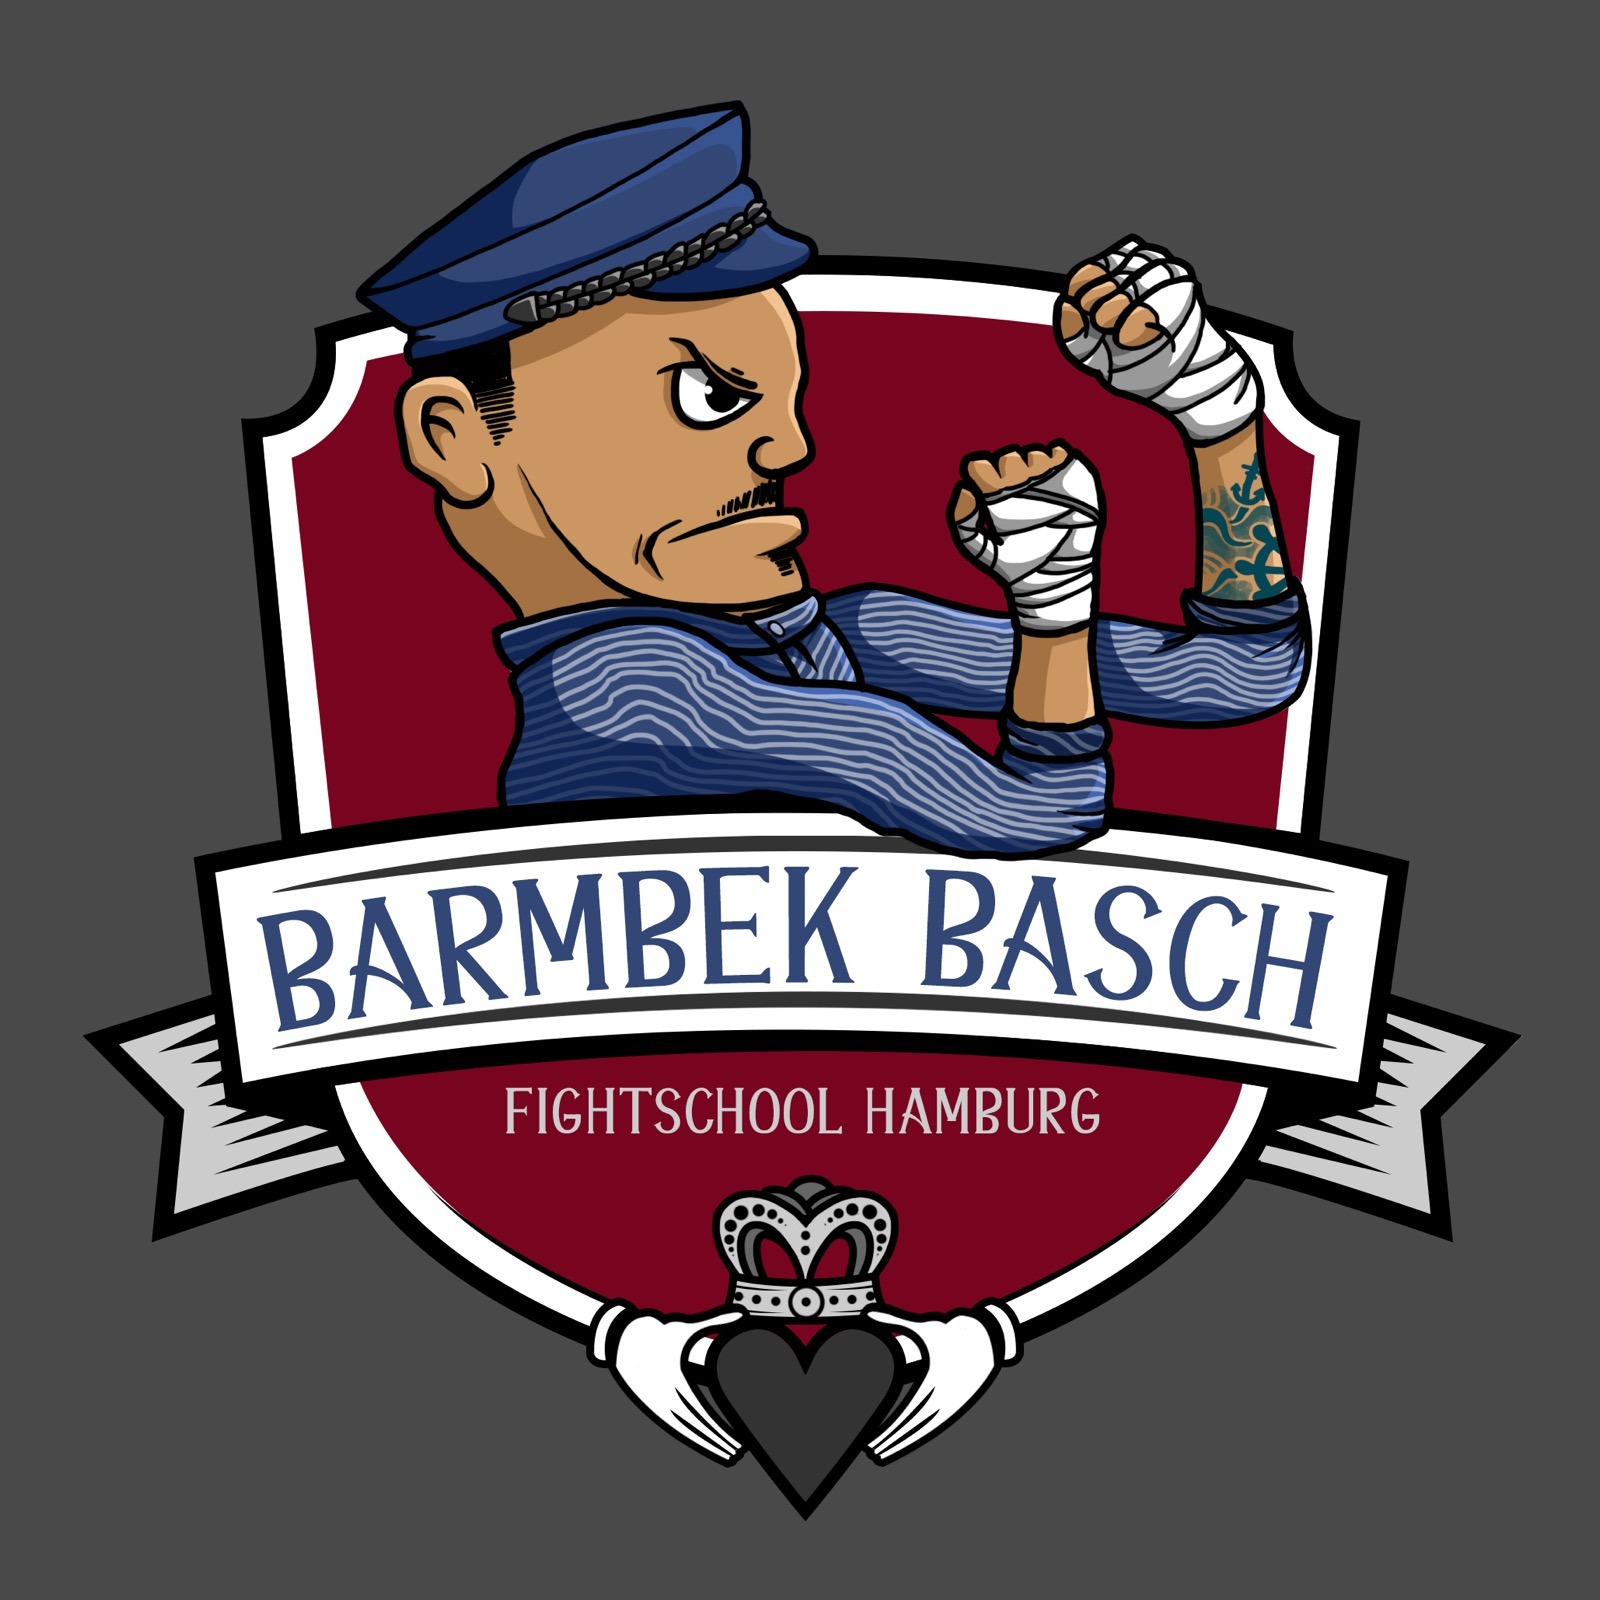 Barmbek Basch Fightschool in Hamburg - Logo